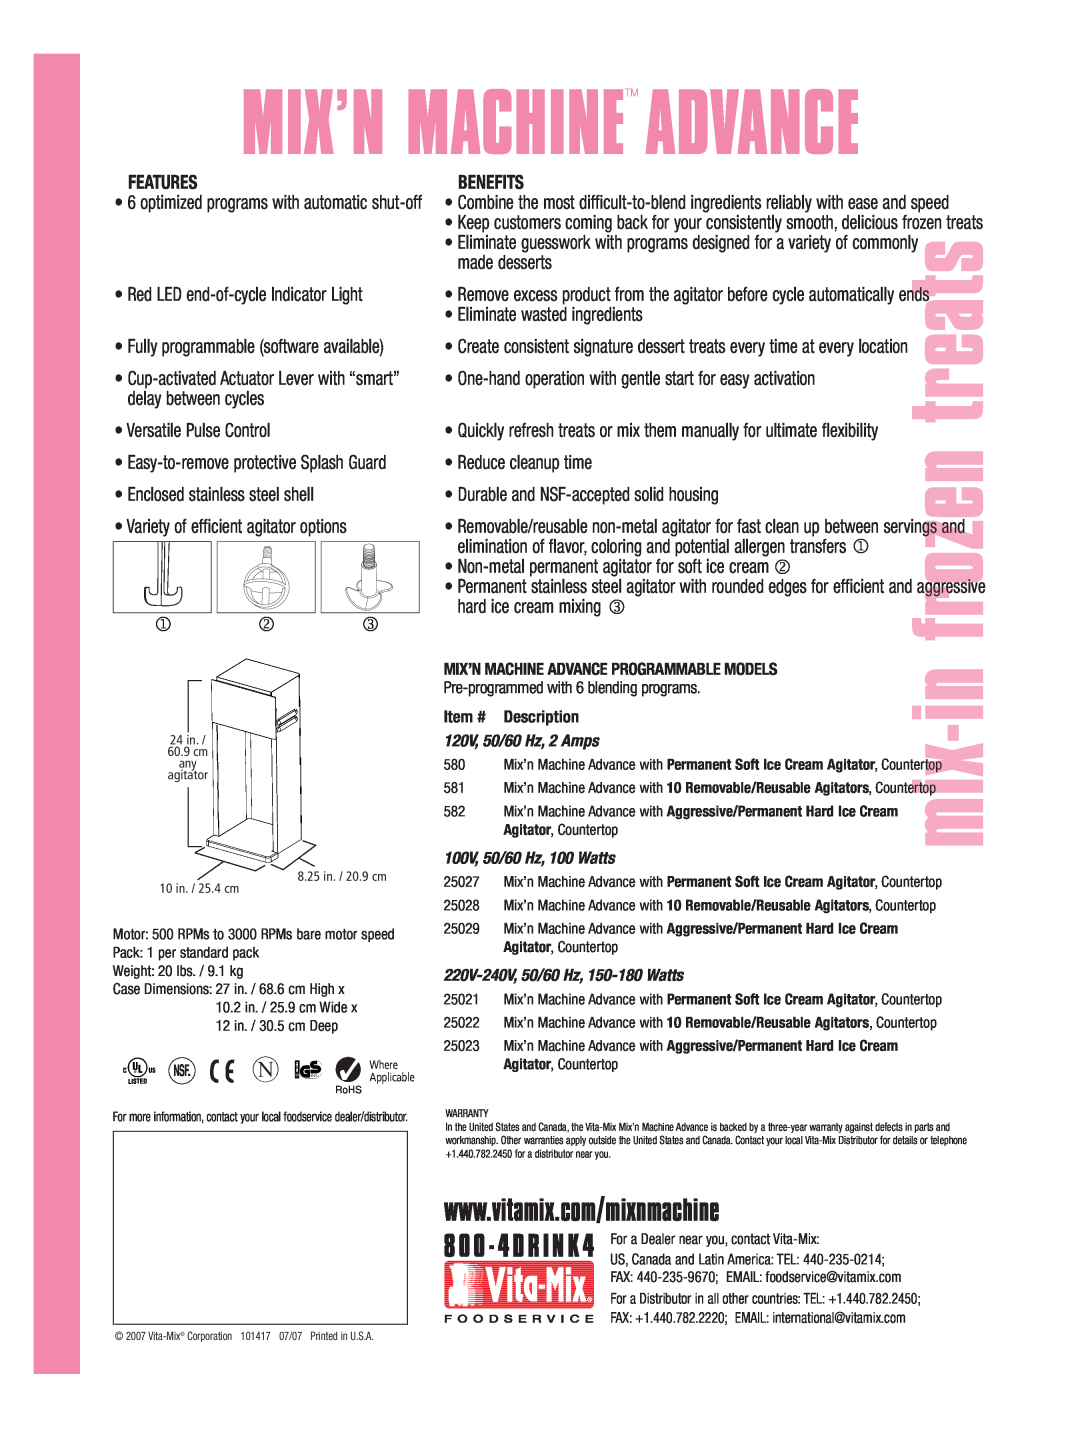 Vita-Mix Frozen Treat Mixer manual Mix’N Machinetm Advance, 8 00 - 4DRI N K4, Features, Benefits 